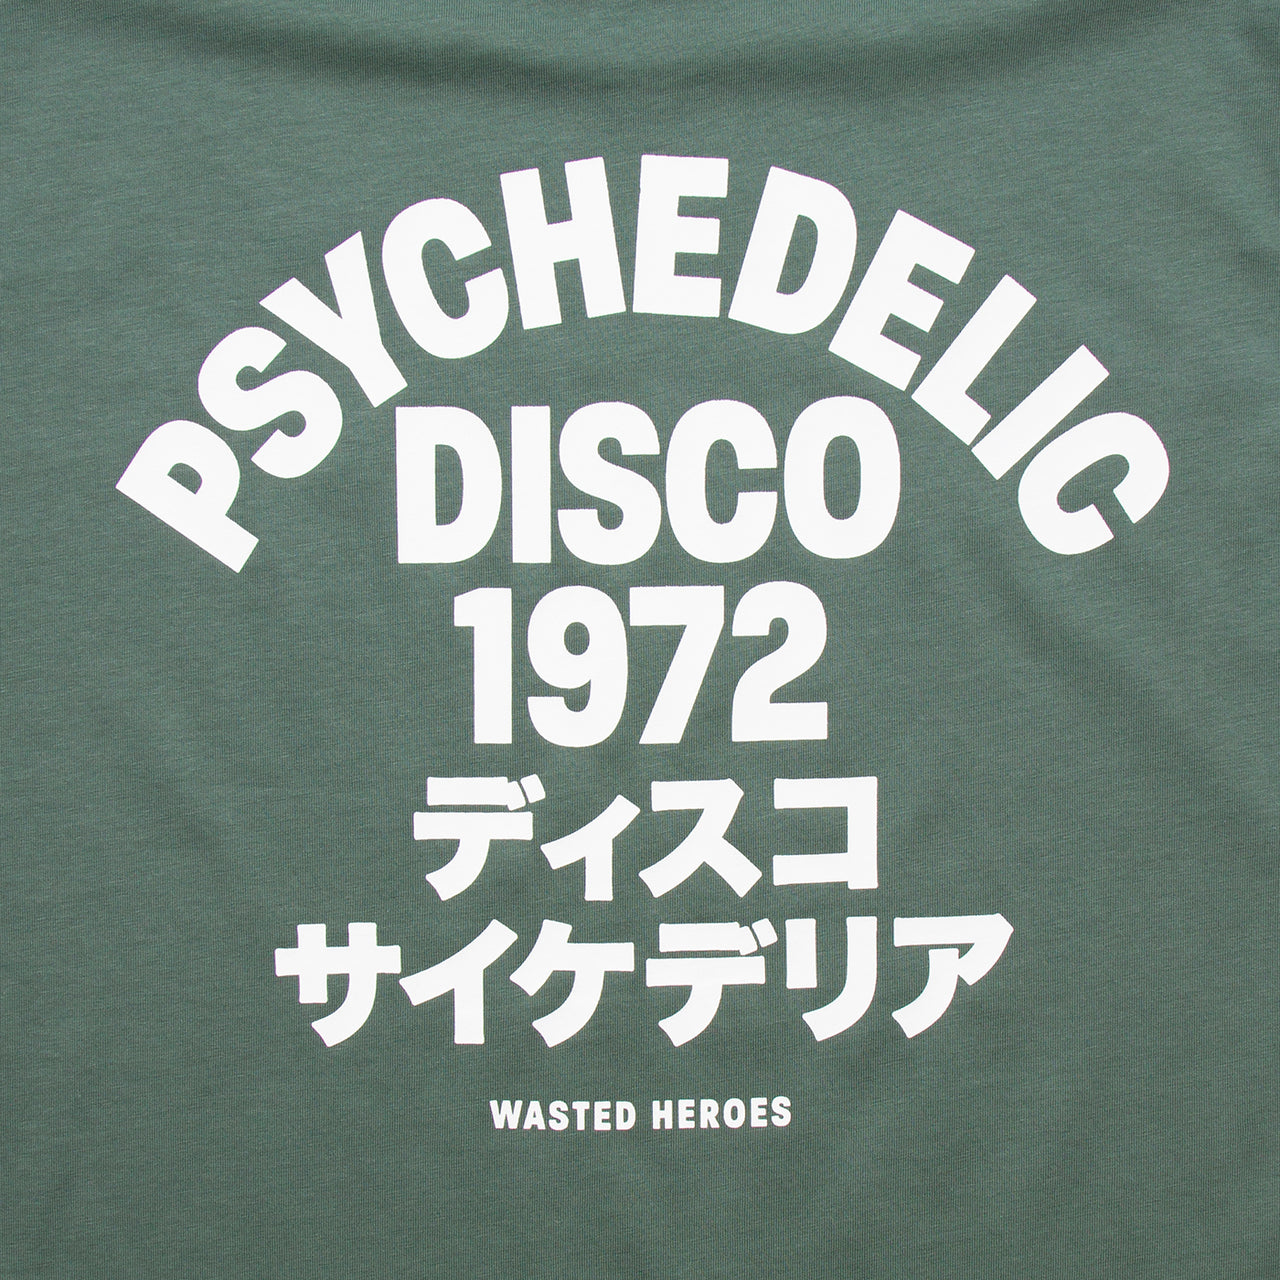 1972 Psychedelic Disco Back Print - Tshirt - Green